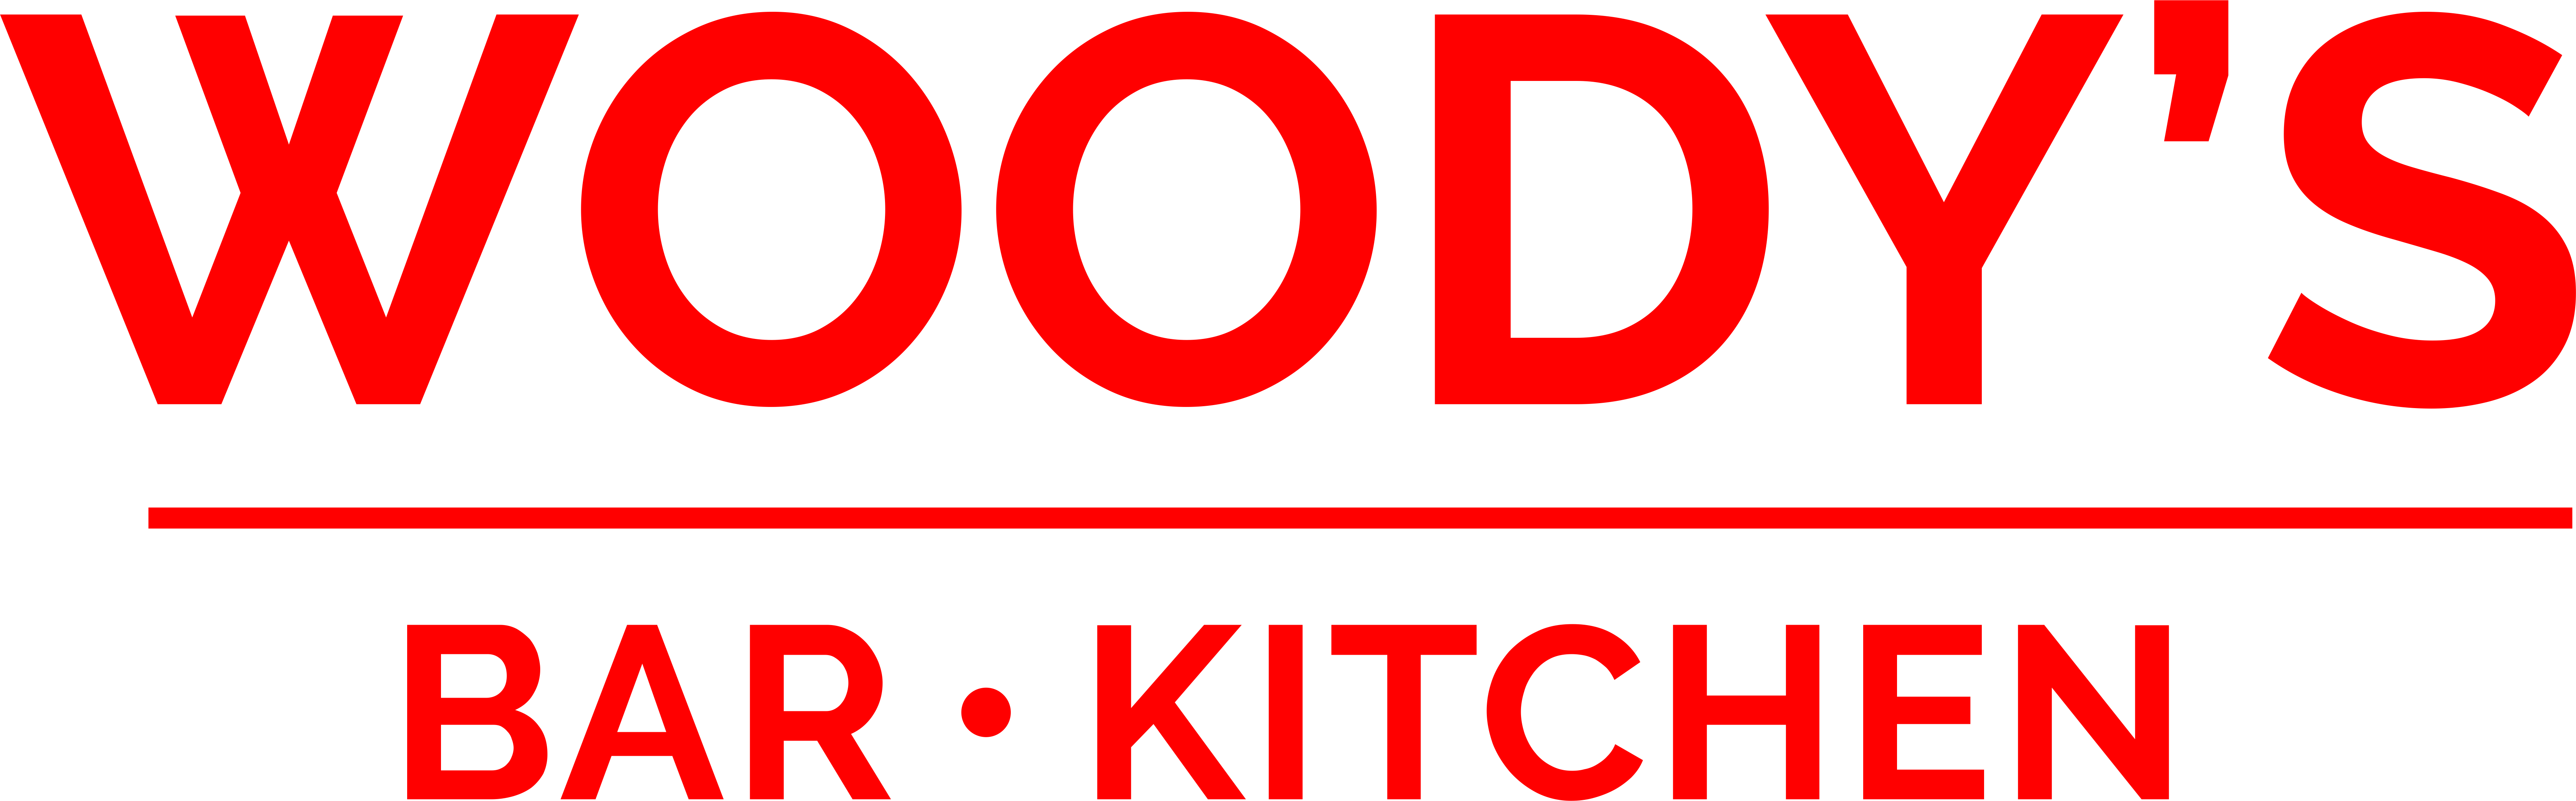 Company logo of WOODY'S BAR & KITCHEN